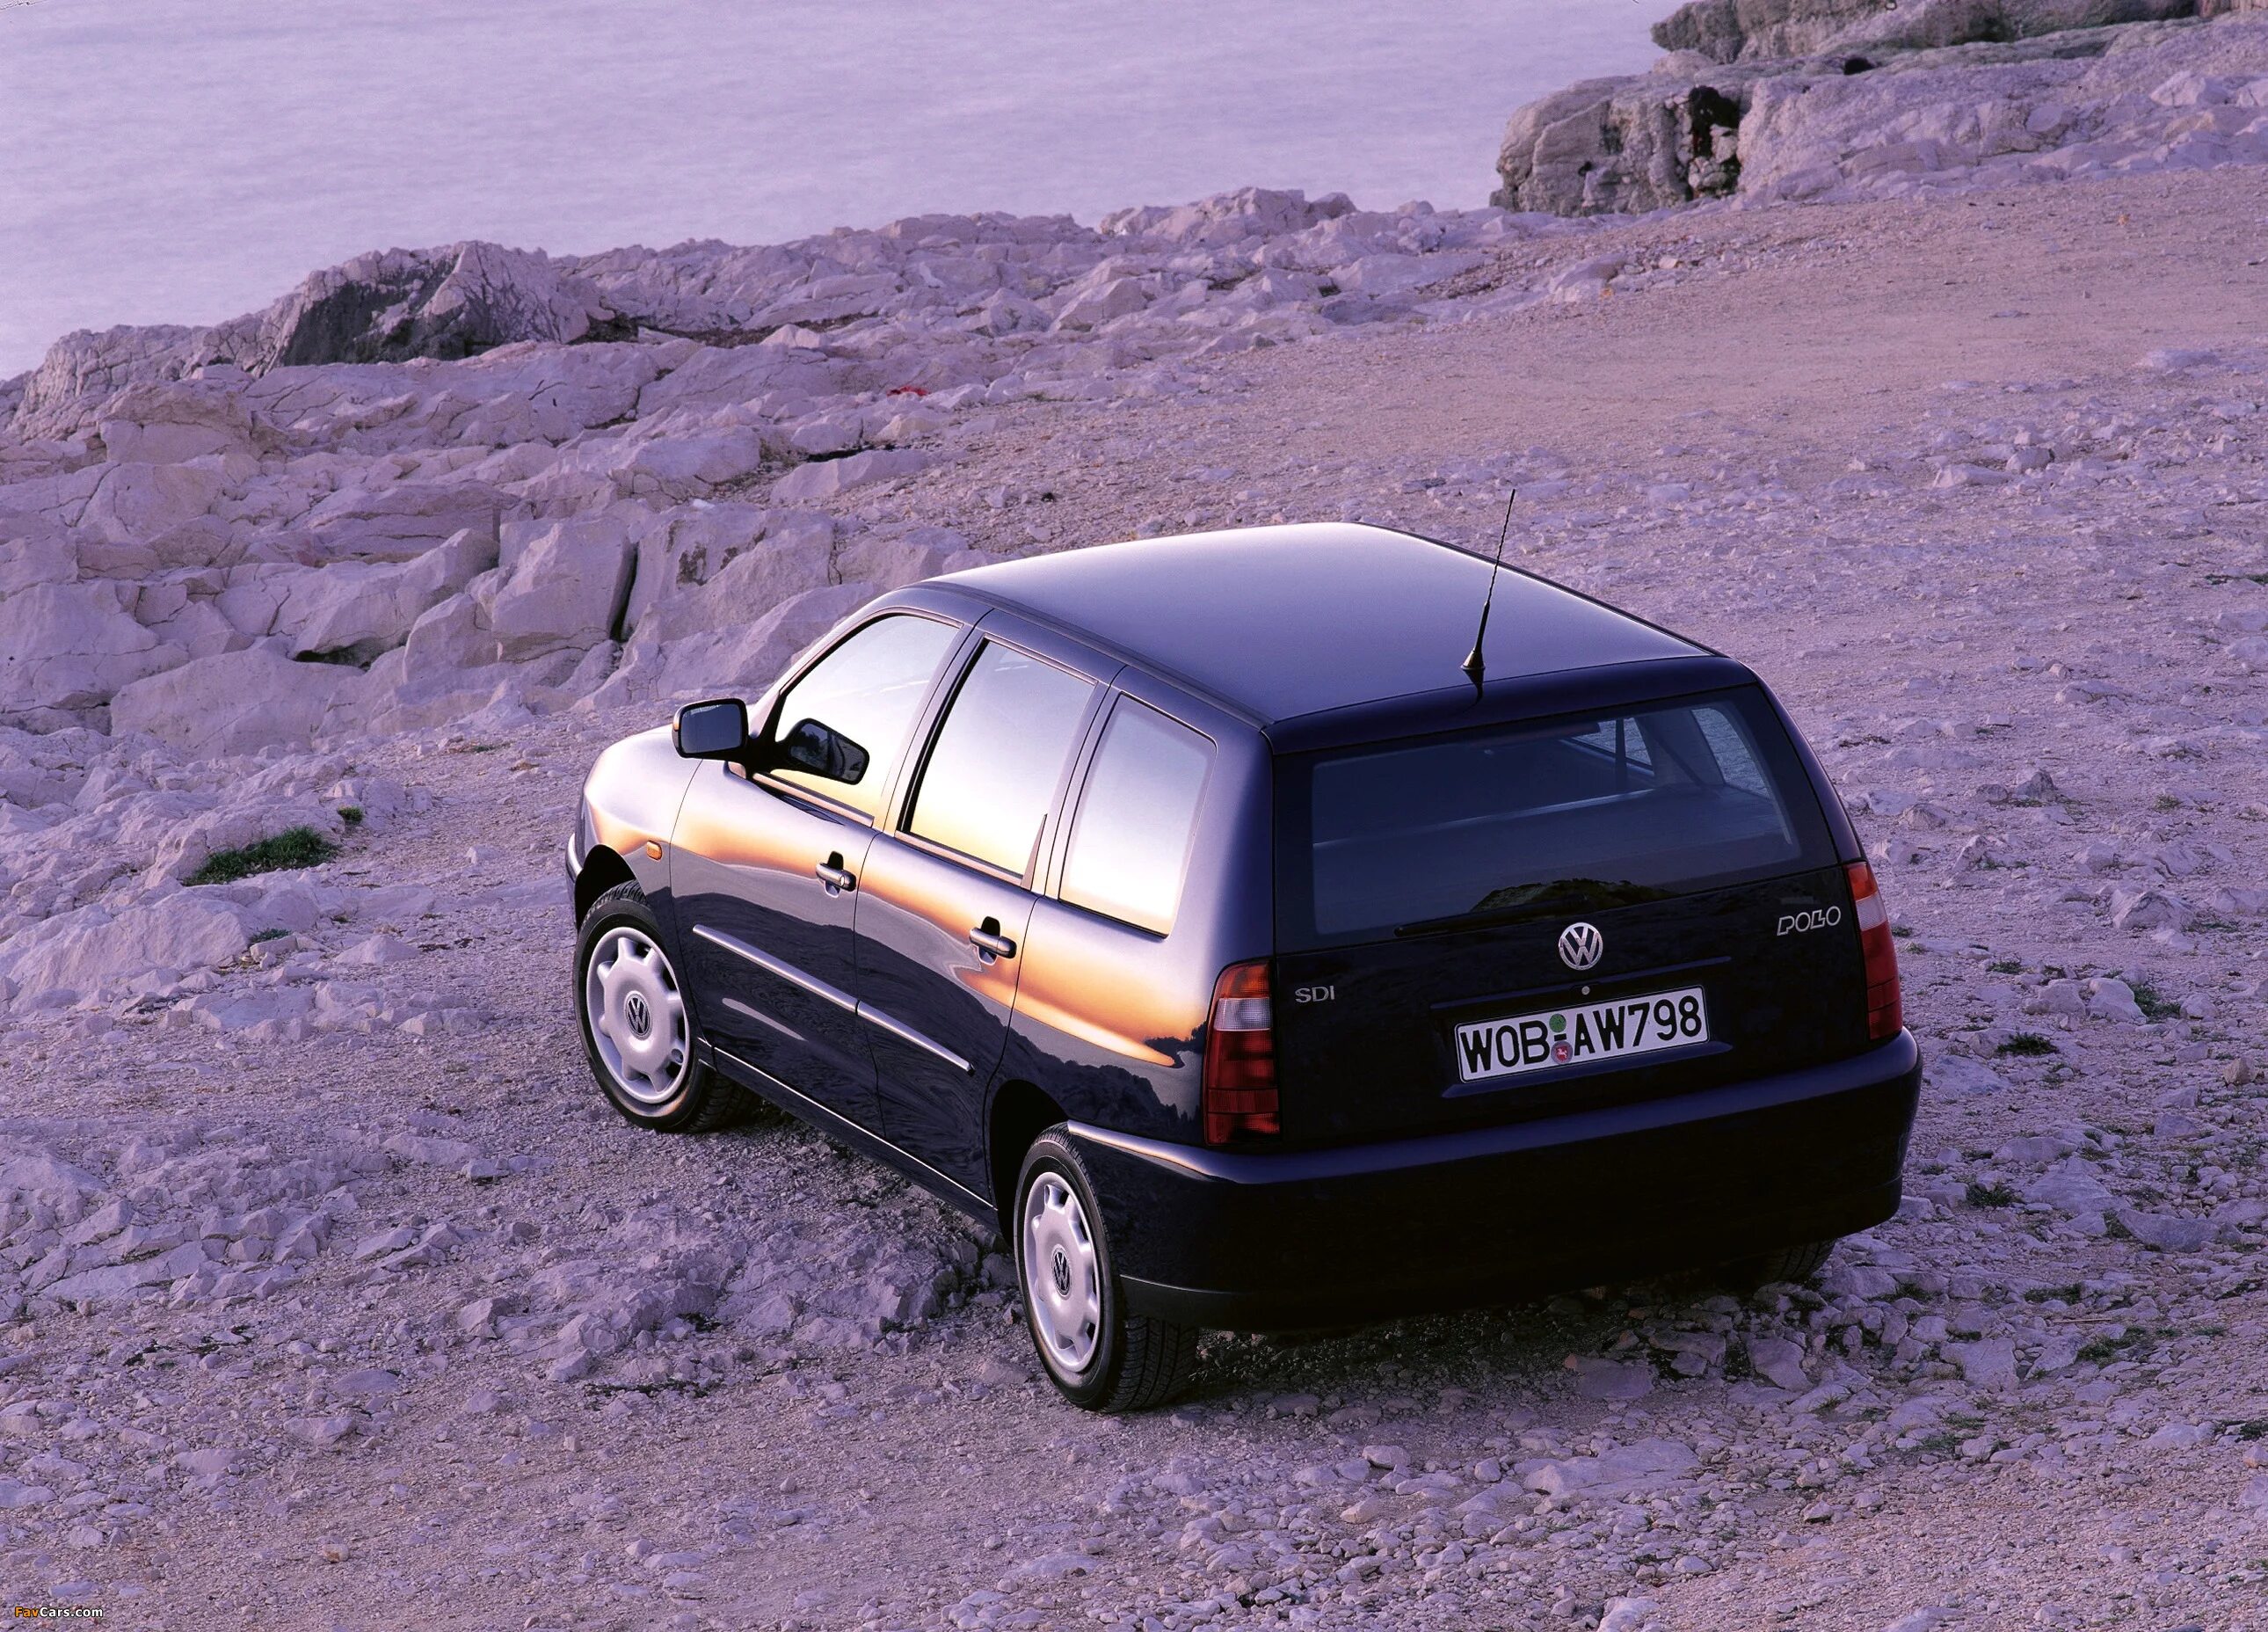 Фольксваген поло 1997. Фольксваген поло универсал 1997. VW Polo 1997. Volkswagen Polo 3 универсал. Поло 1997 года